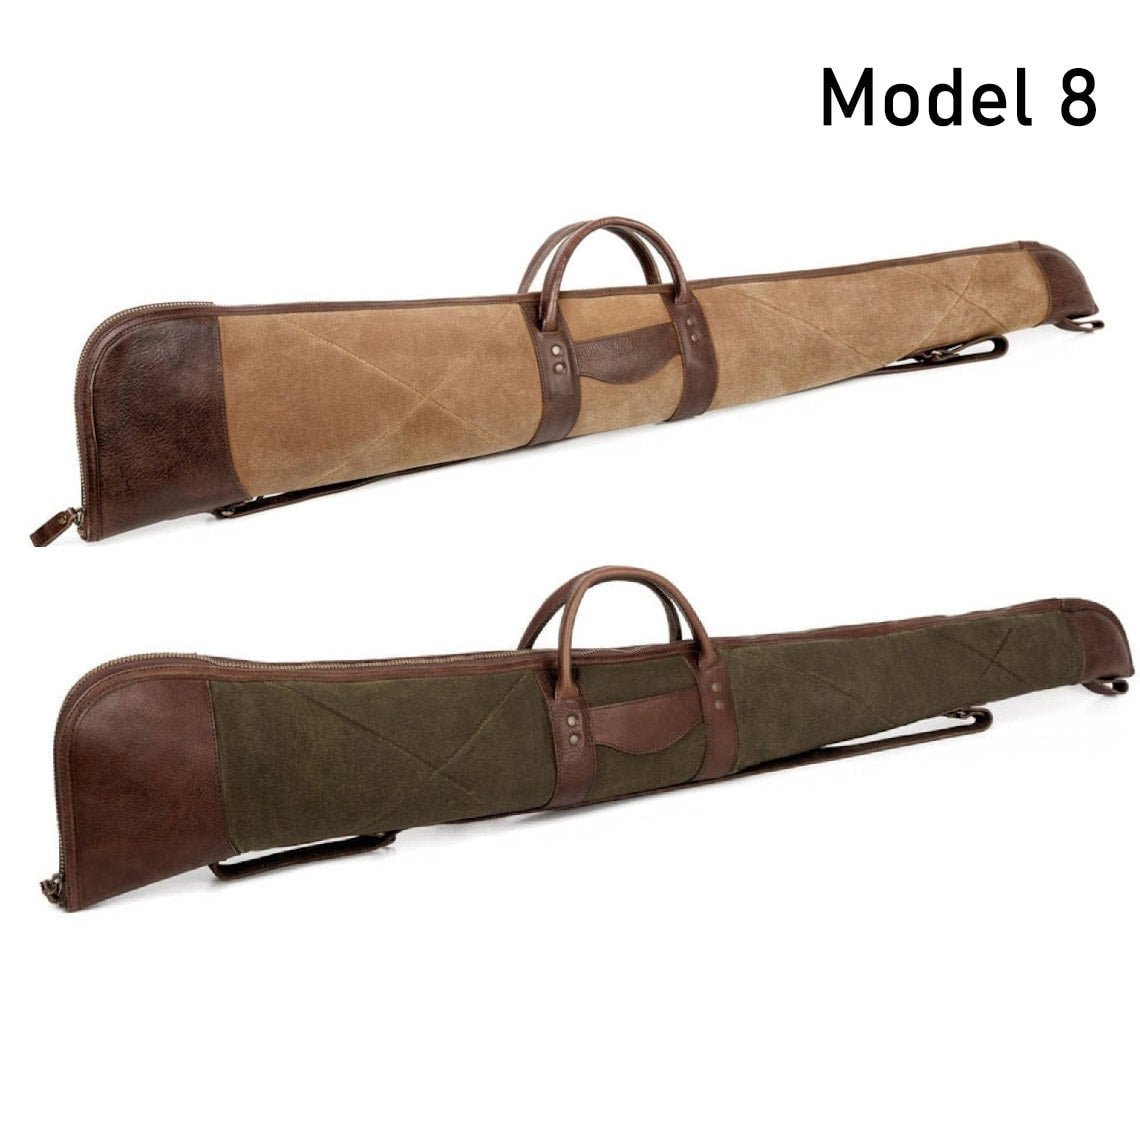 Handmade 9 Model | Leather Rifle Bag | Canvas Rifle Bag | Waxed Canvas | Leather | Rifle Bag | Hunting | Rifle | Gun case  | Personalization  99percenthandmade 40 Model 8 Green 